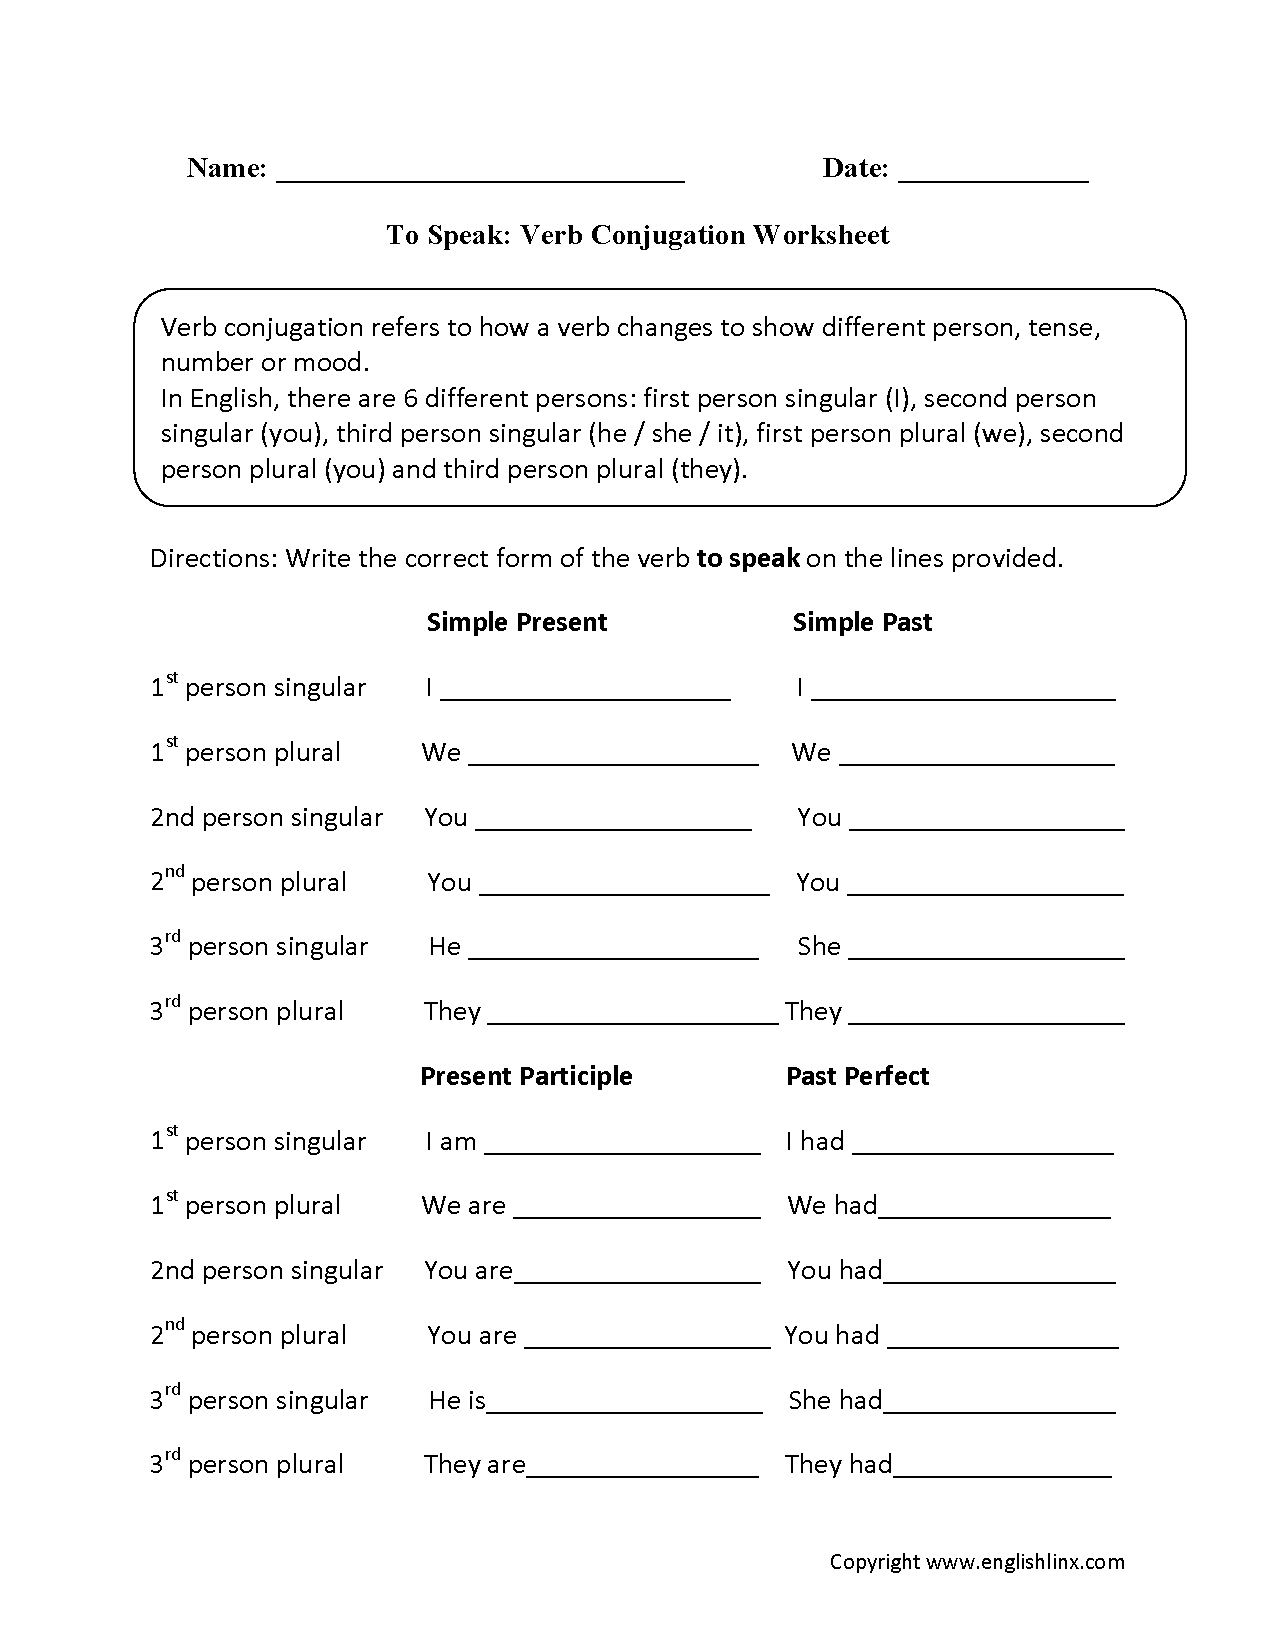 To Speak Verb Conjugation Worksheets